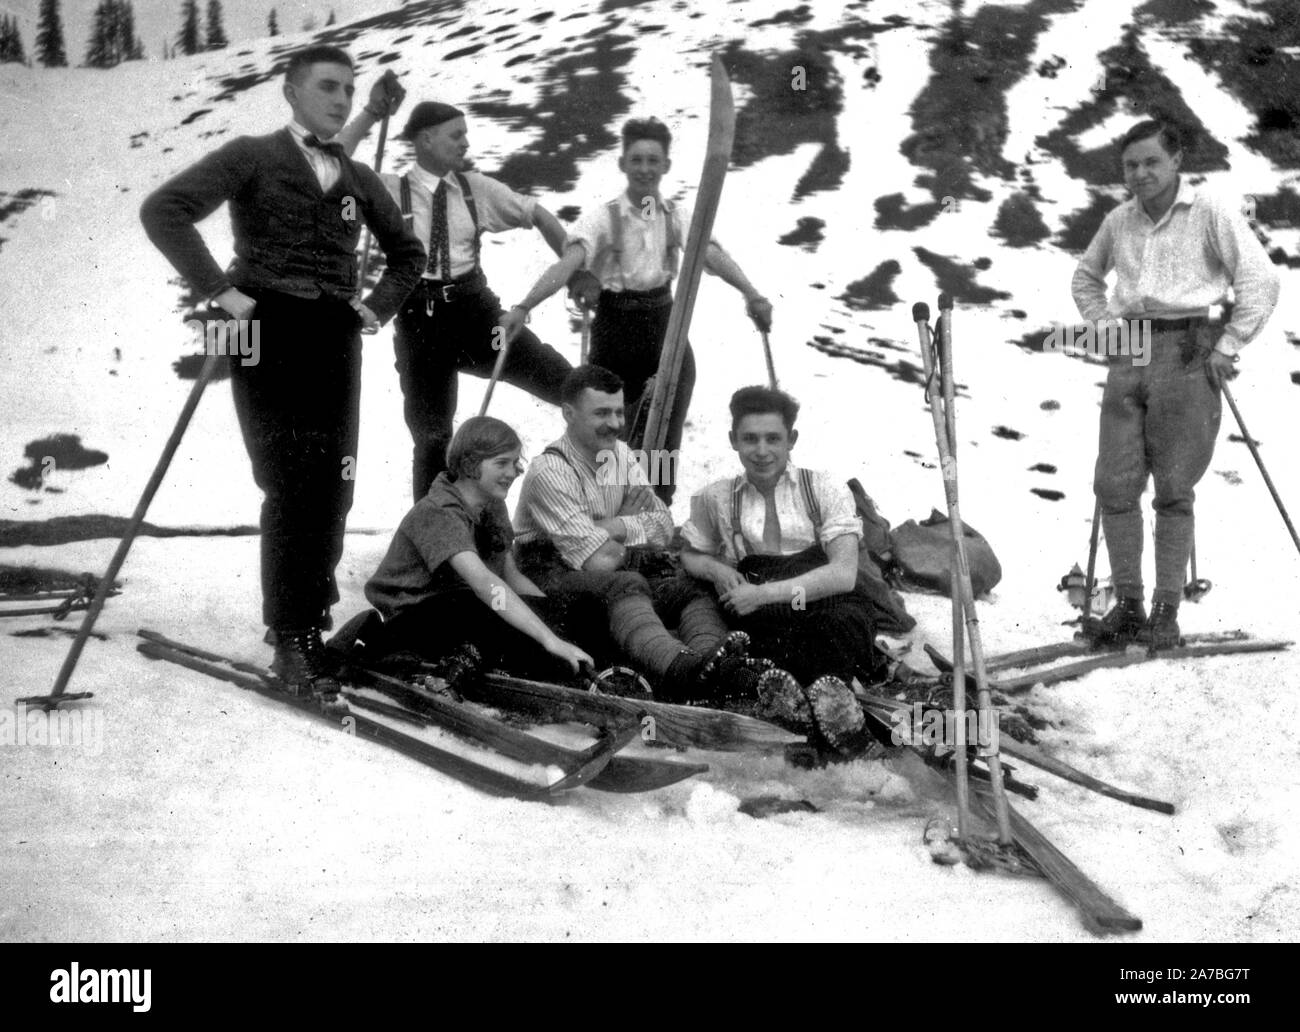 Eva Braun Photos (album 31) - Bein Skiefahrem and der Badenselmeid - ski  party Stock Photo - Alamy